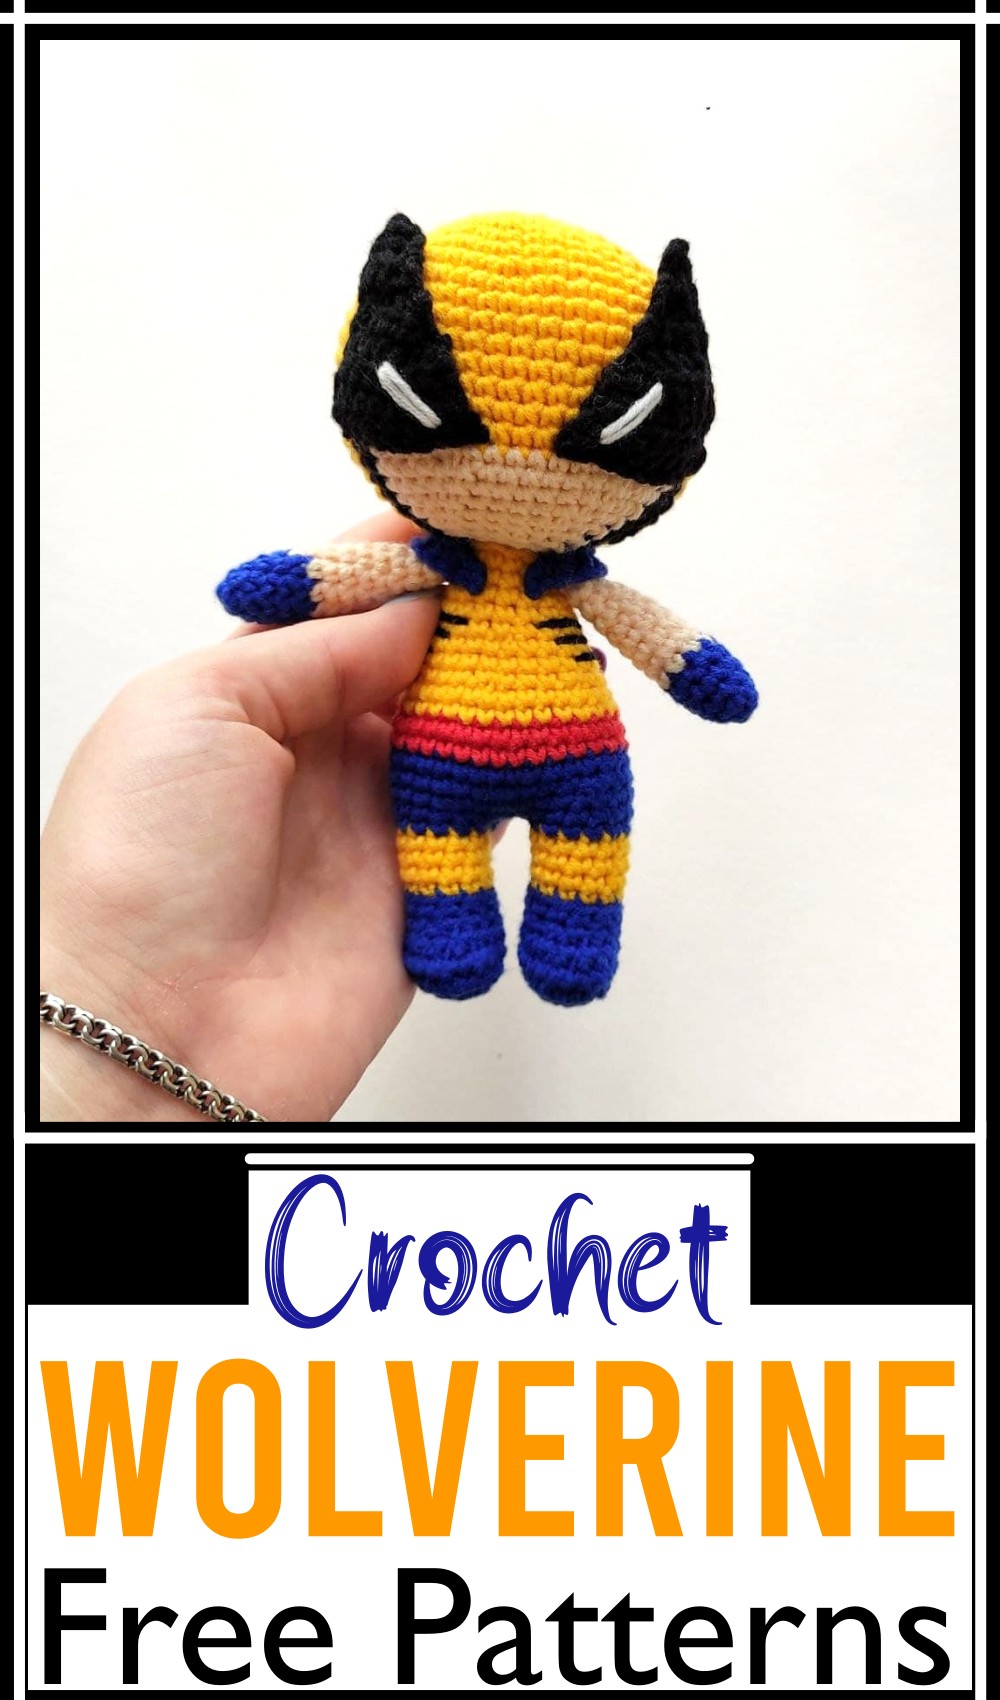 Crochet Wolverine